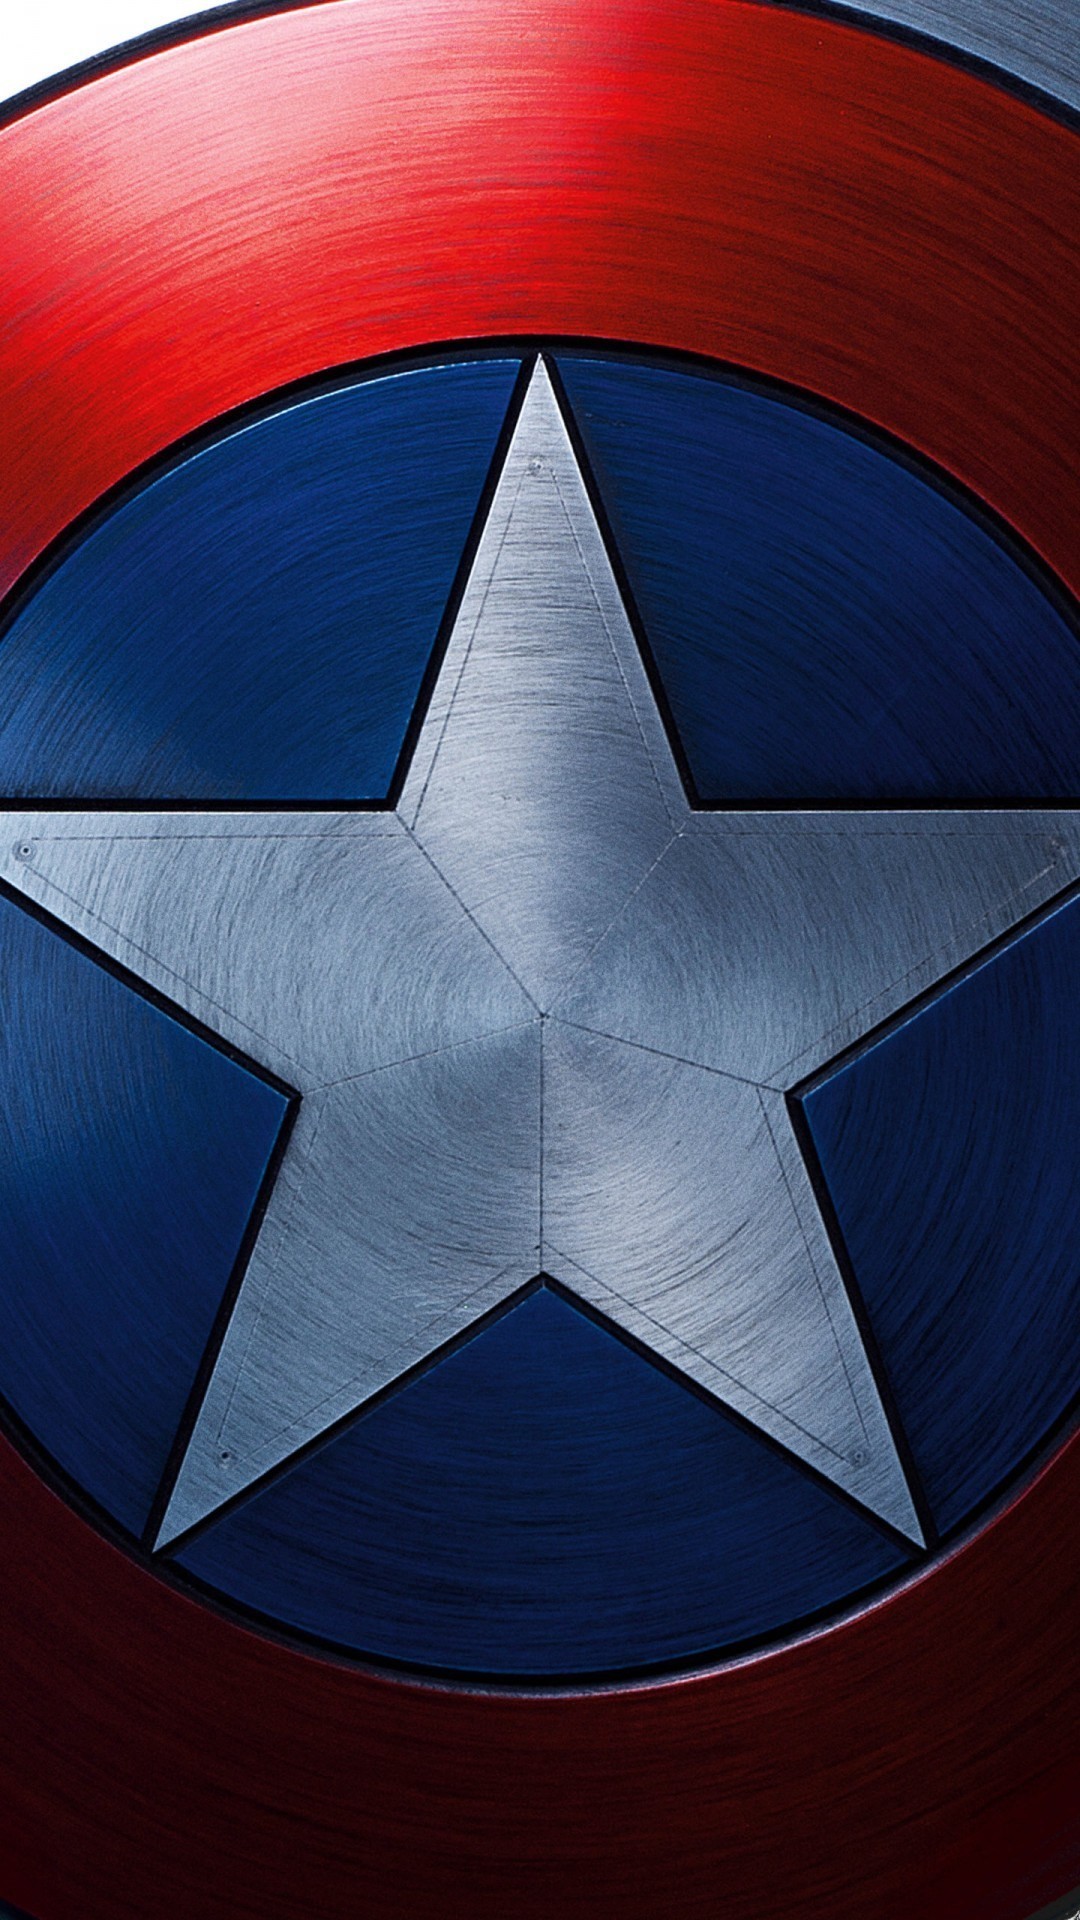 Captain America Art iPhone Wallpaper  iPhone Wallpapers  Captain america  art Captain america wallpaper Captain america